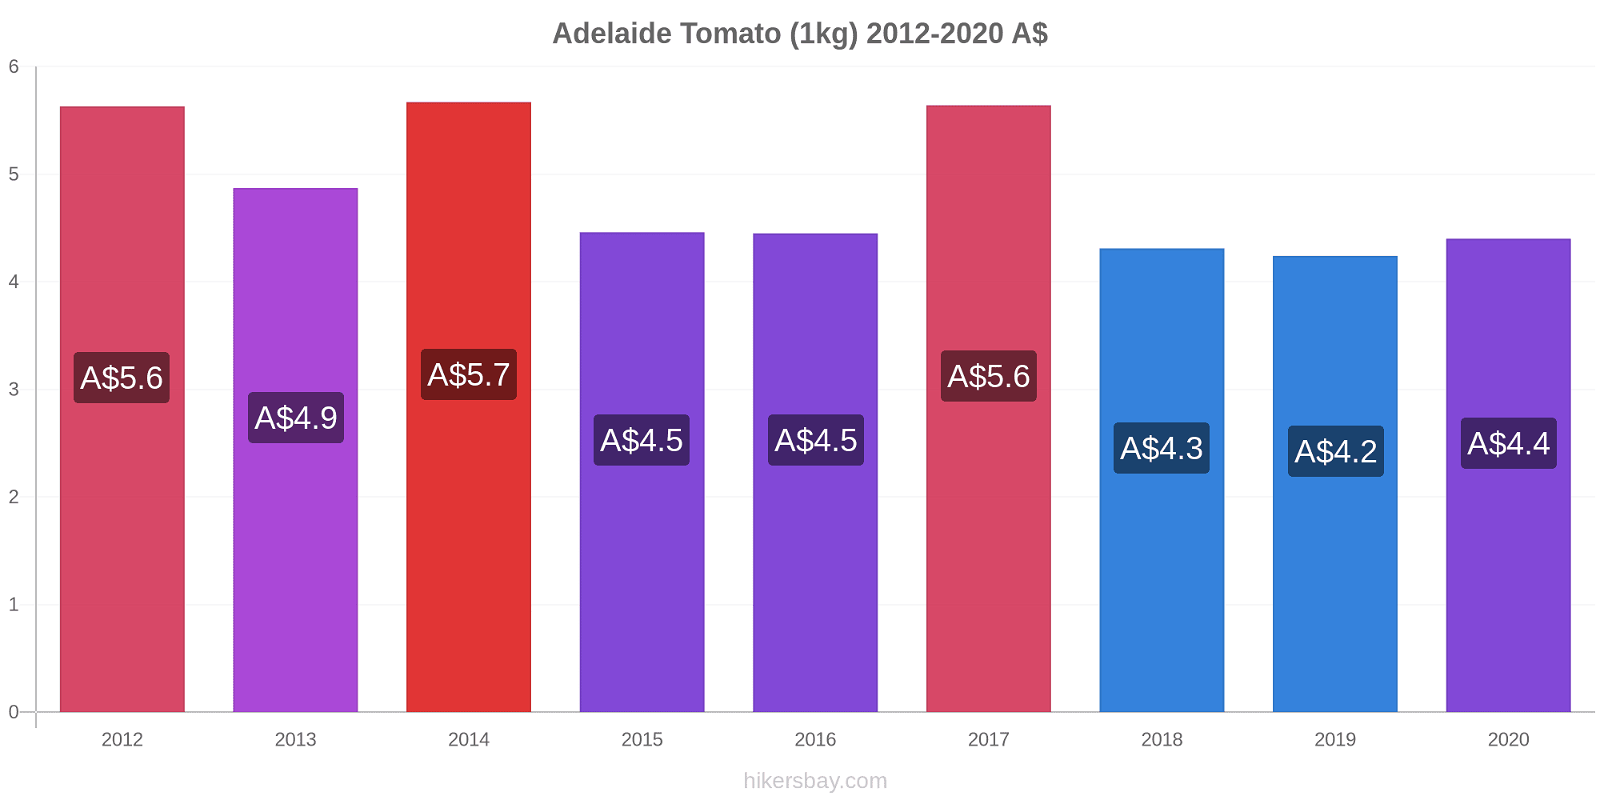 Adelaide price changes Tomato (1kg) hikersbay.com